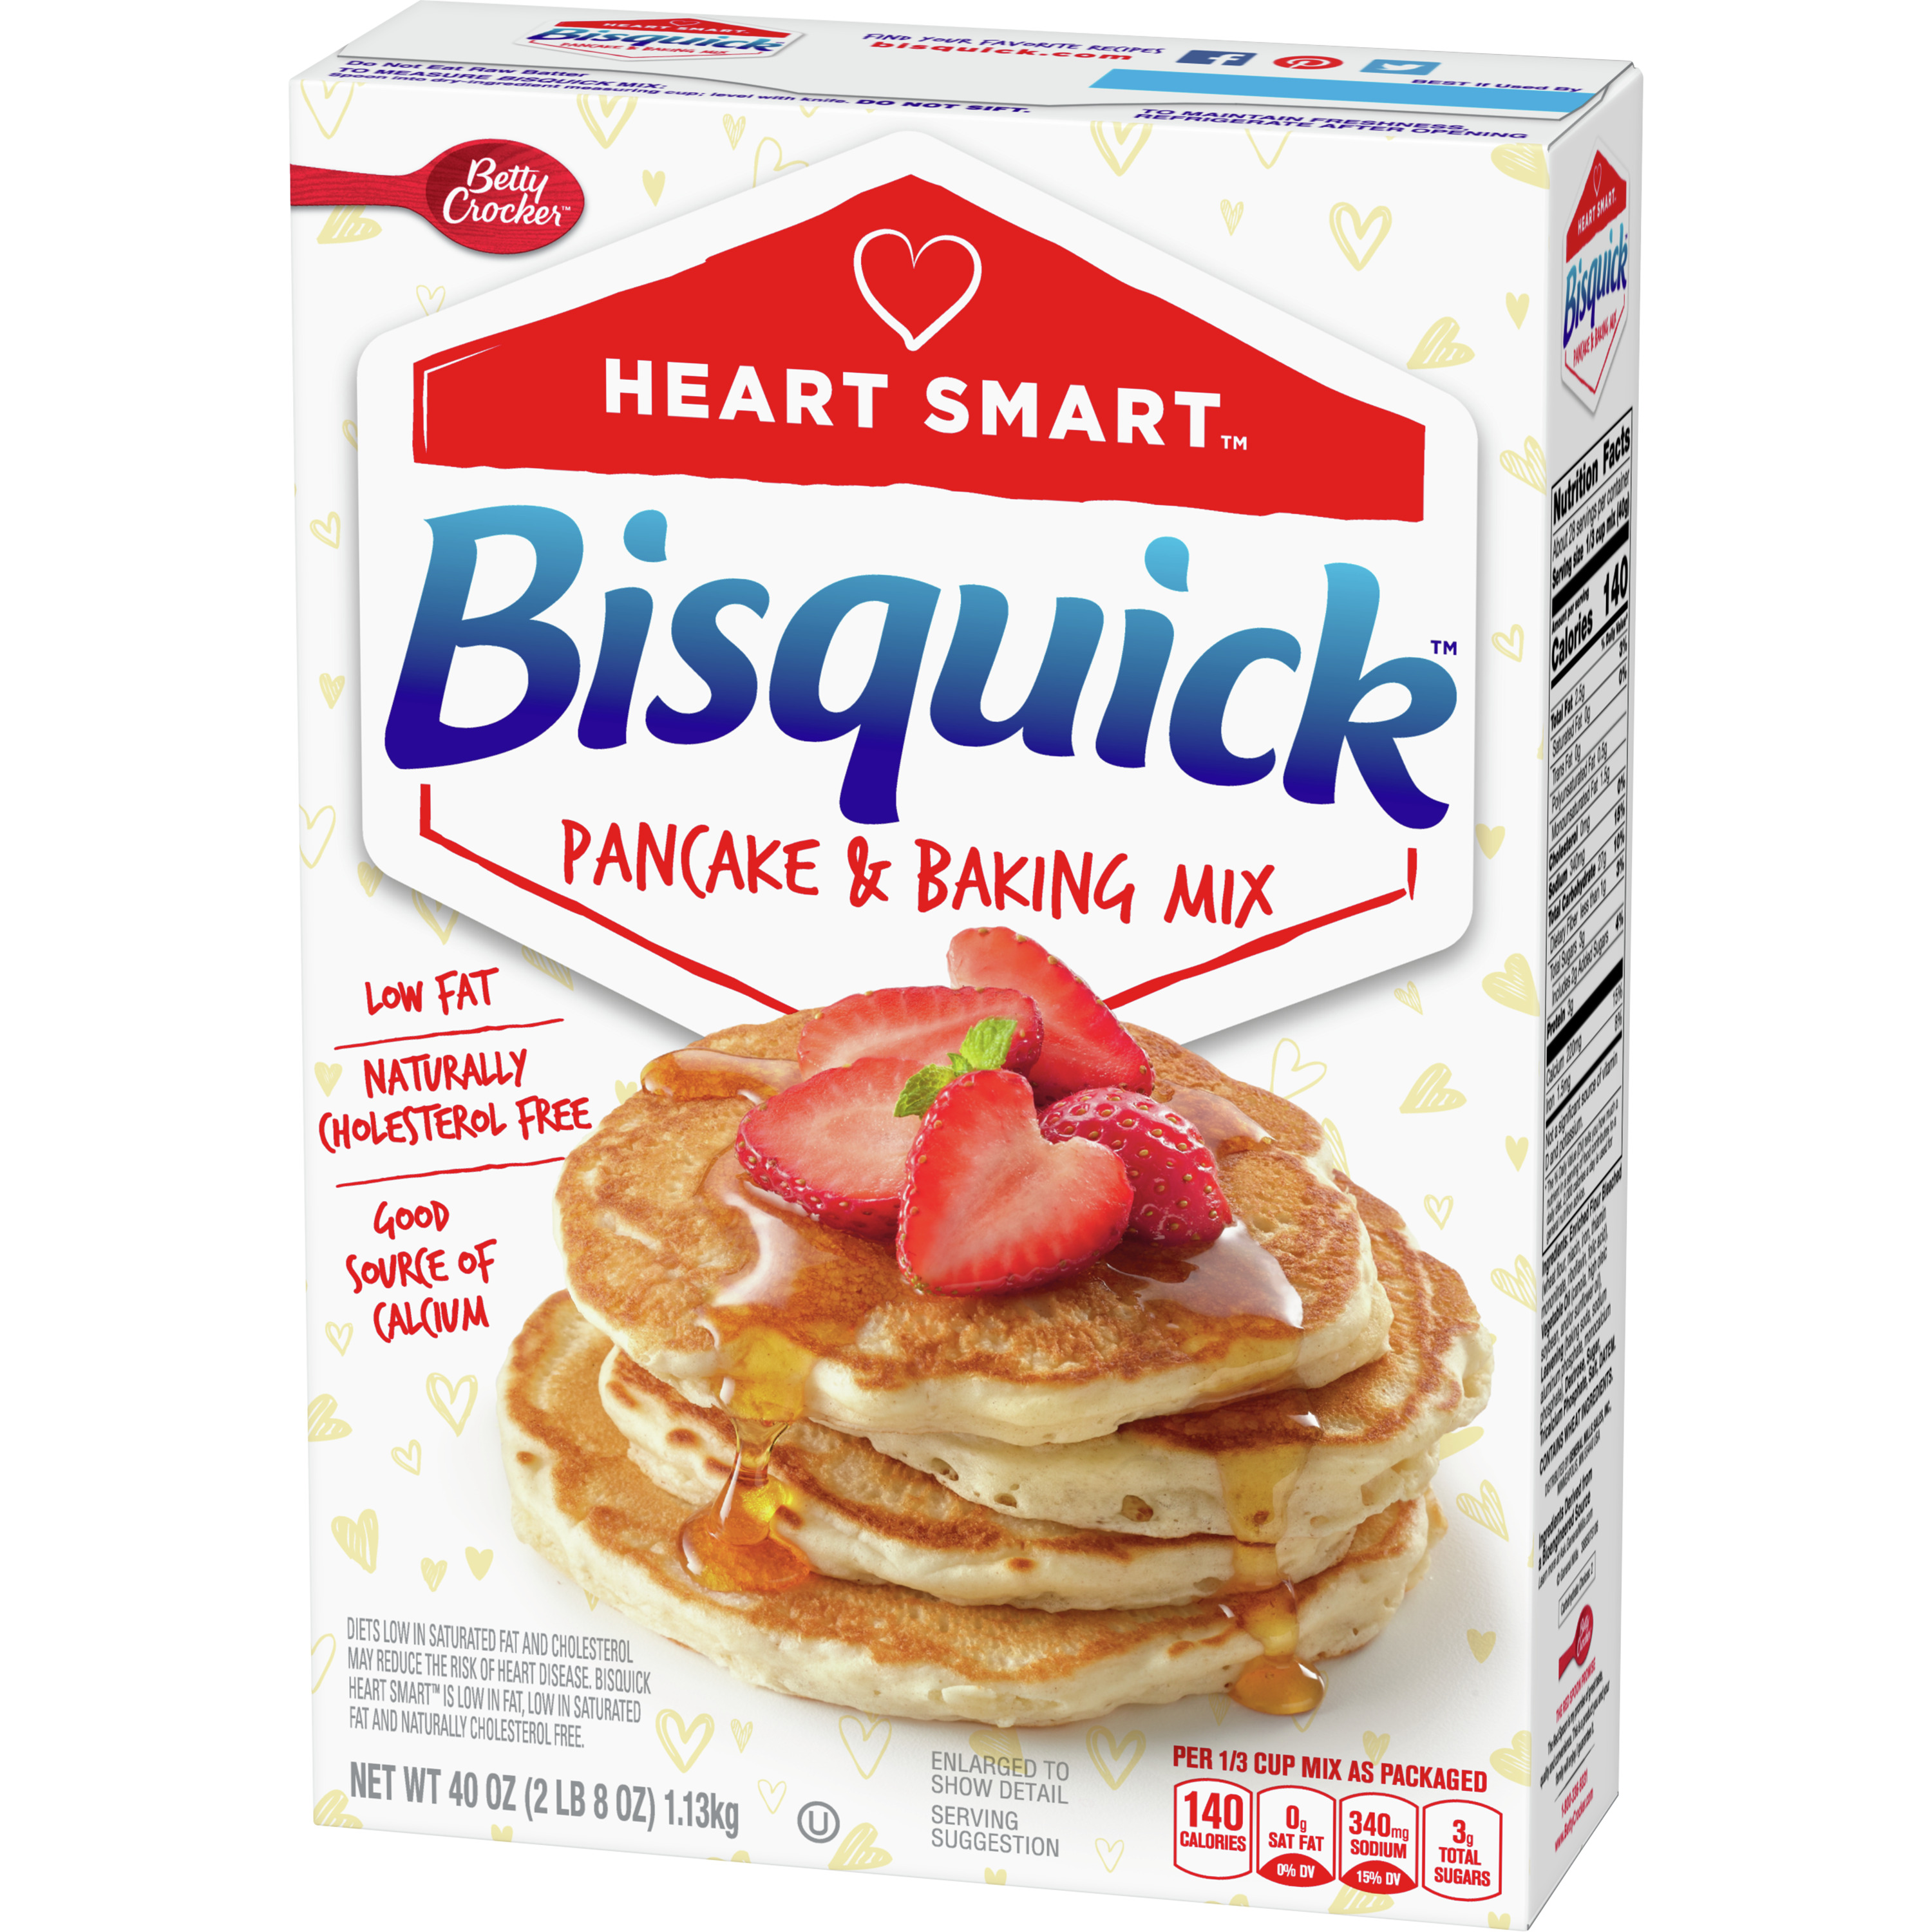 Betty Crocker Heart Smart Bisquick Pancake and Baking Mix, Low-fat & Cholesterol-free, 40 oz. - image 4 of 10